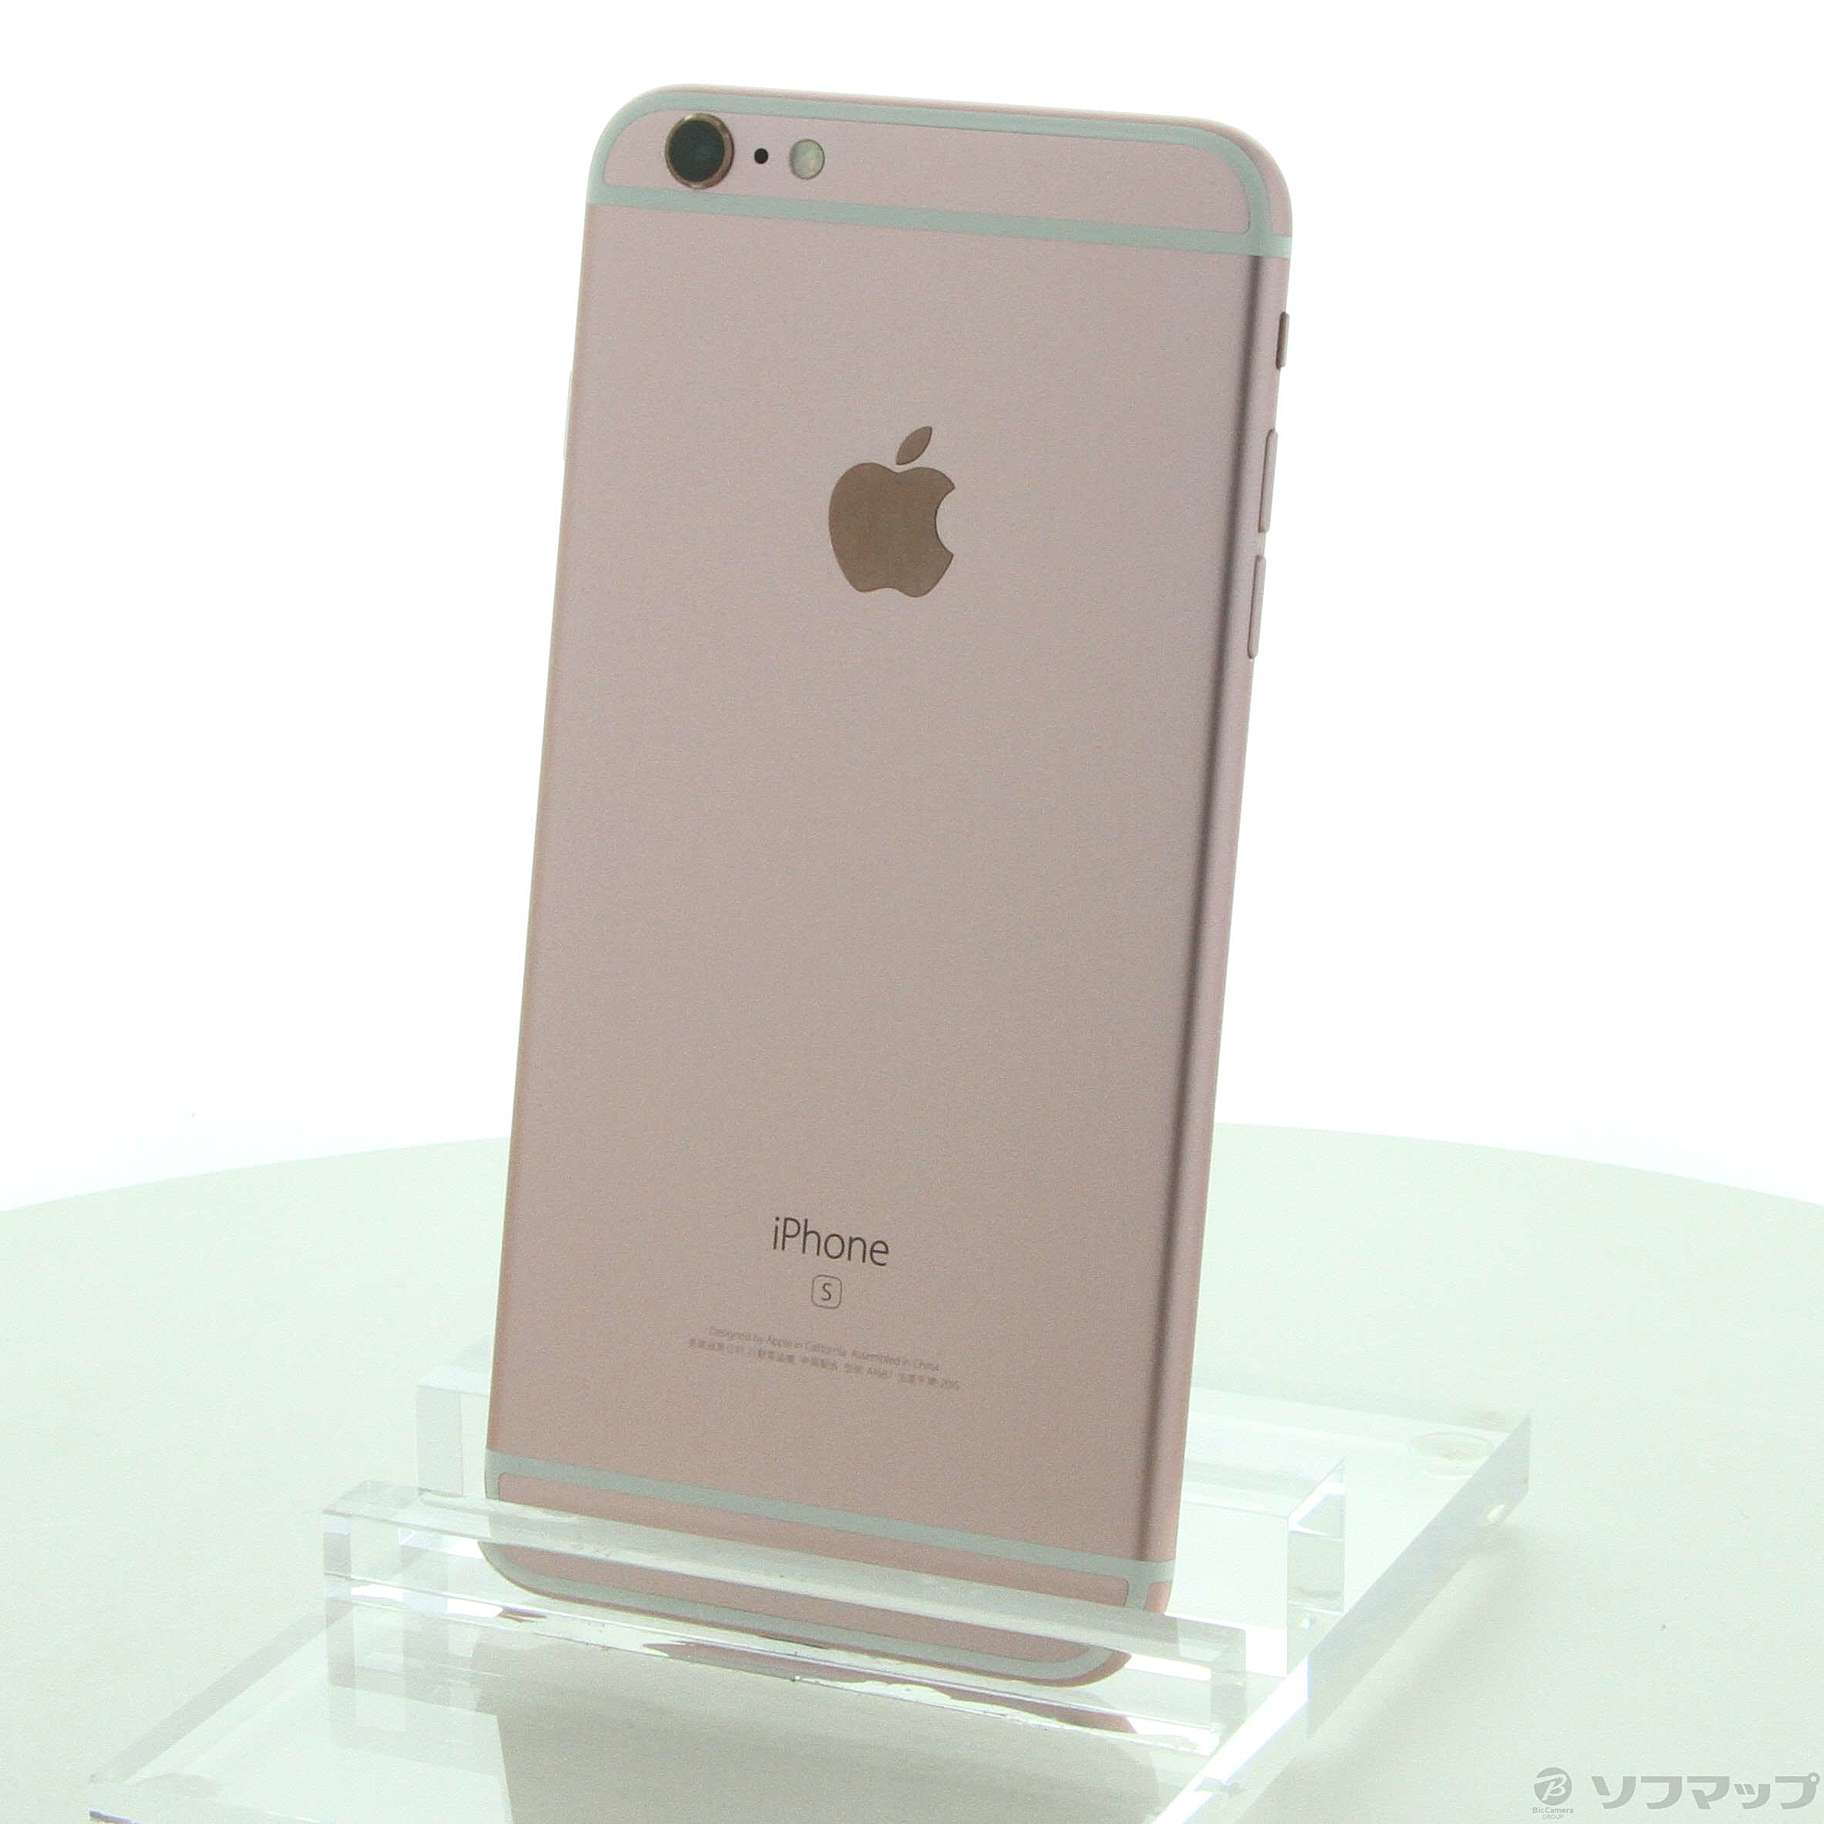 大特価 iPhone6s Plus 64GB Rose Gold Simフリー 送料無料吉澤|家電 